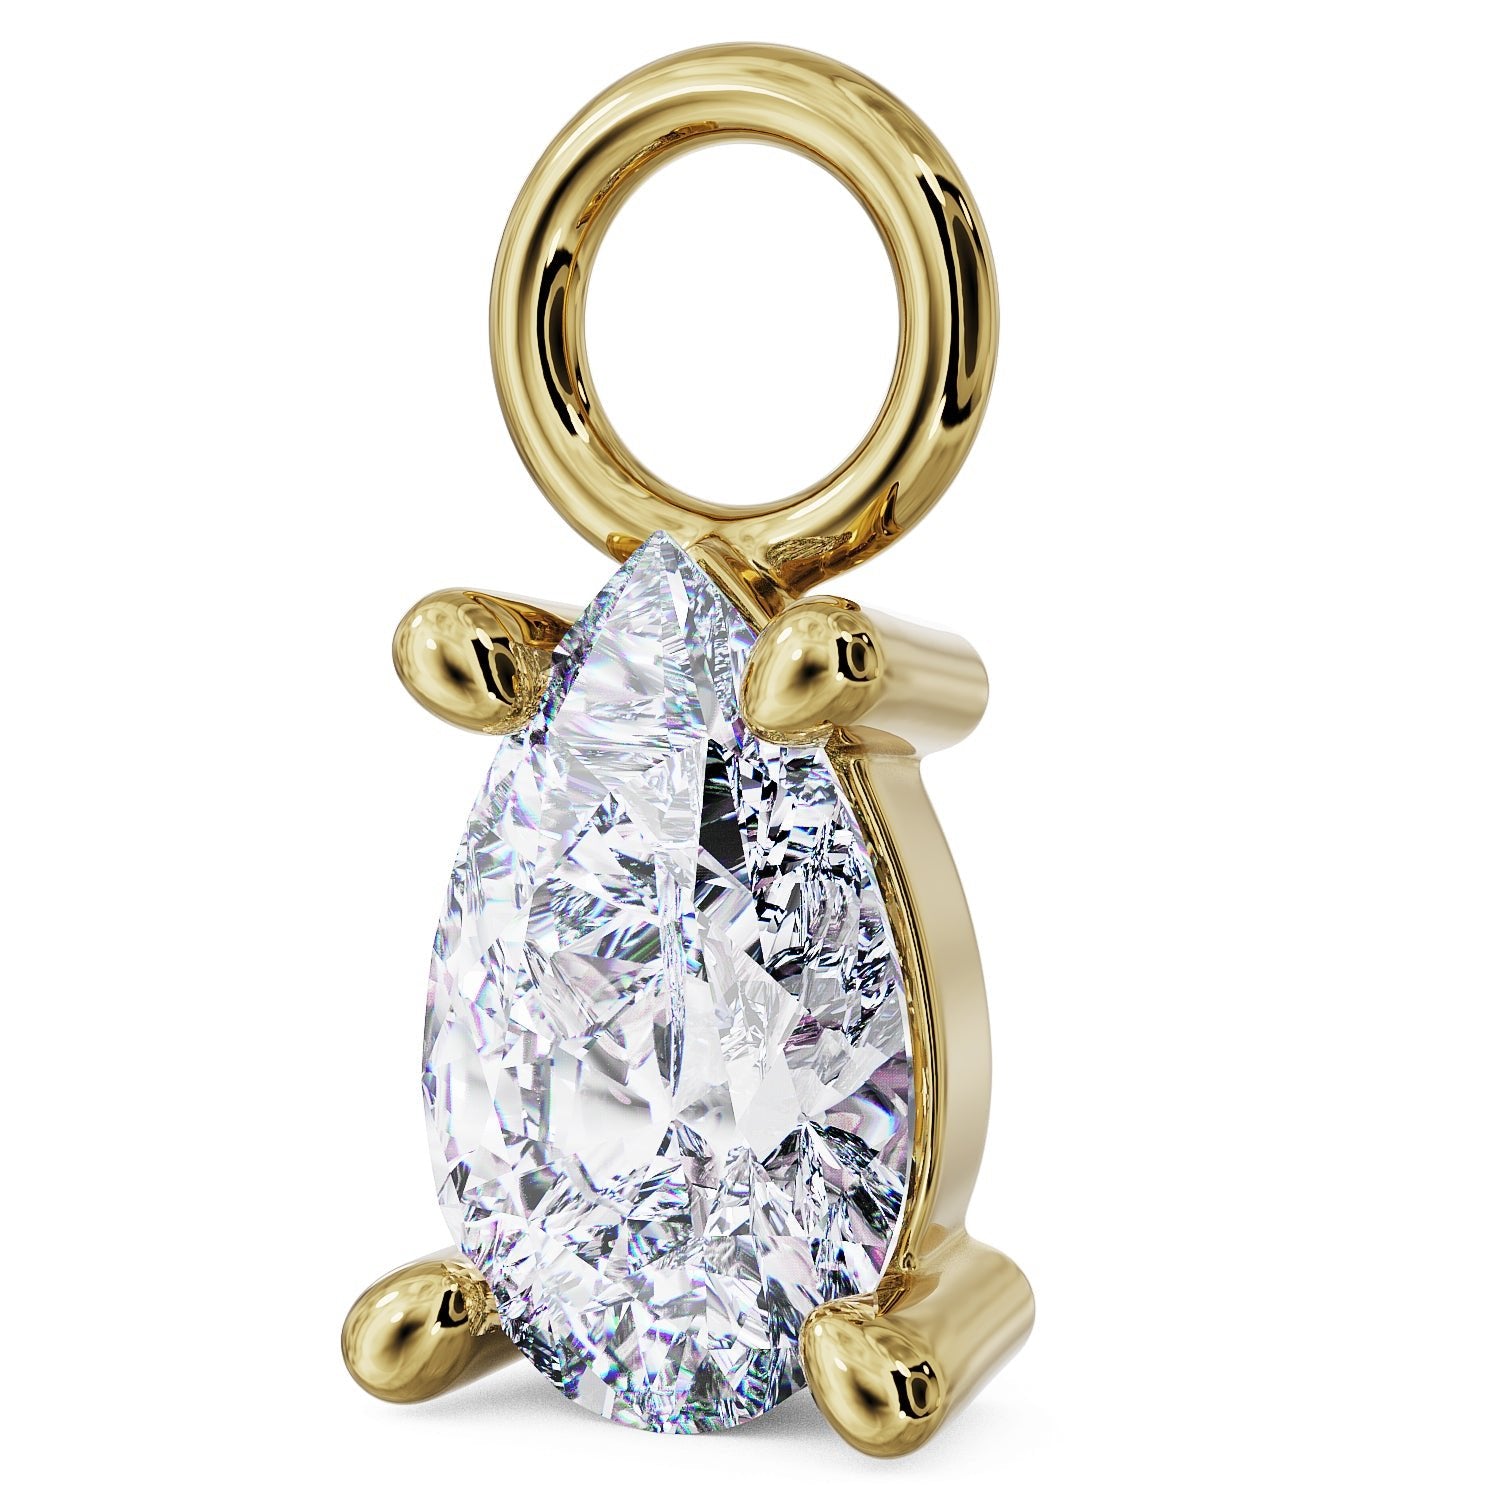 Pear Drop Diamond or CZ Charm Accessory for Piercing Jewelry